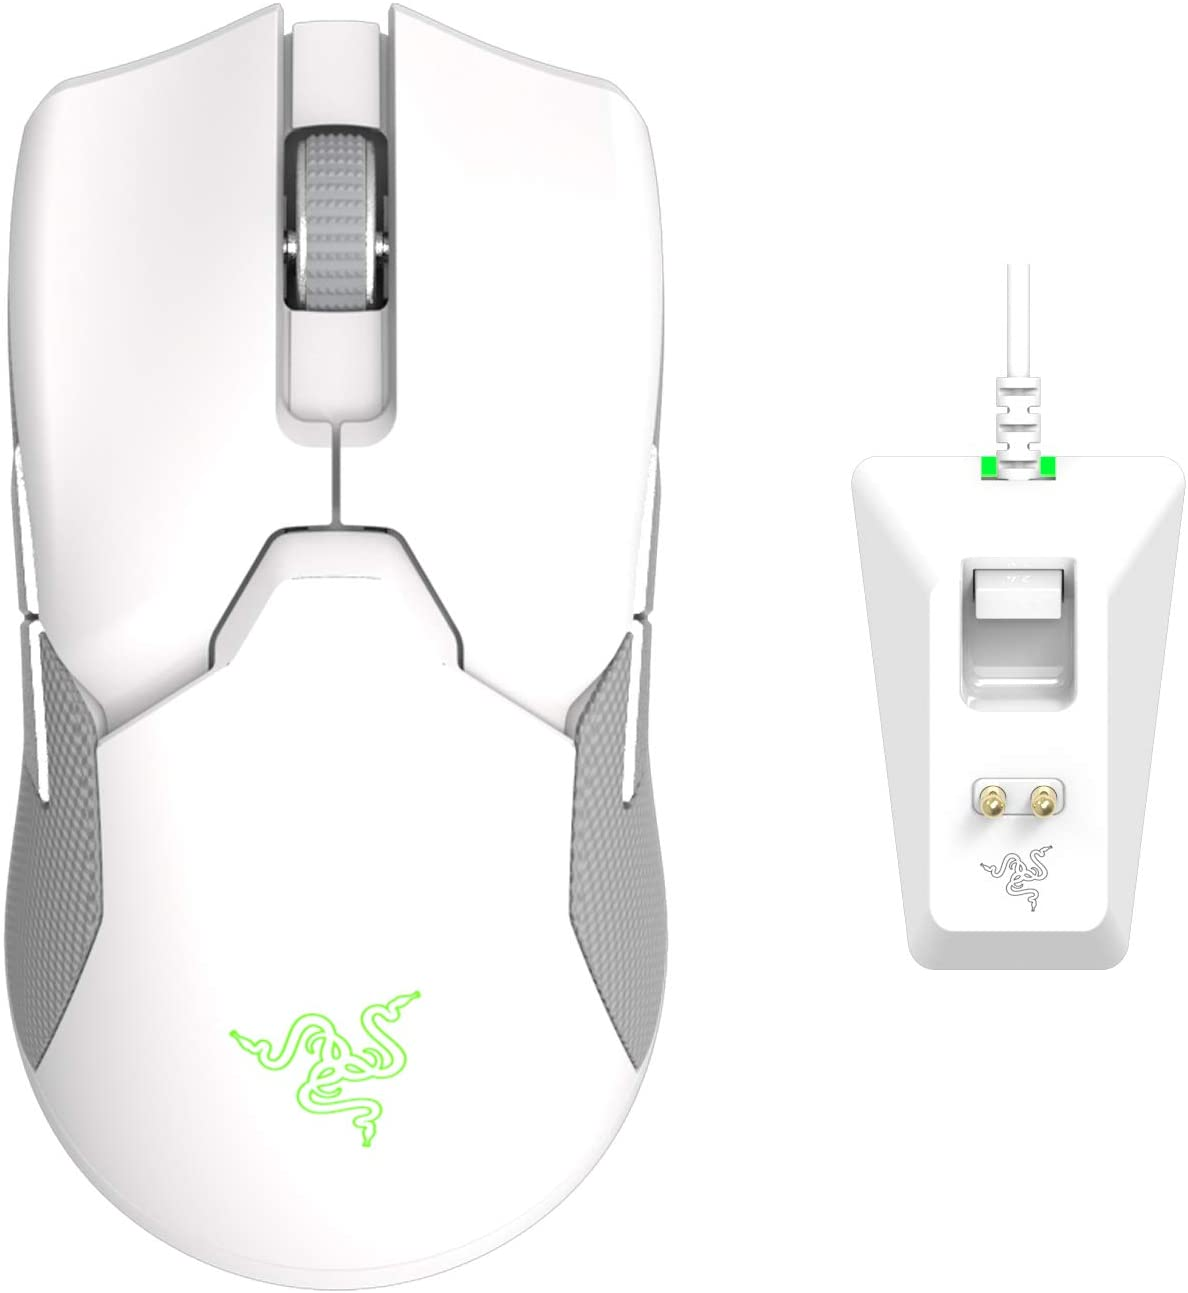 Amazon.com: Razer Viper Ultimate Lightest Wireless Gaming Mouse & RGB Charging Dock in Mercury White $99.99